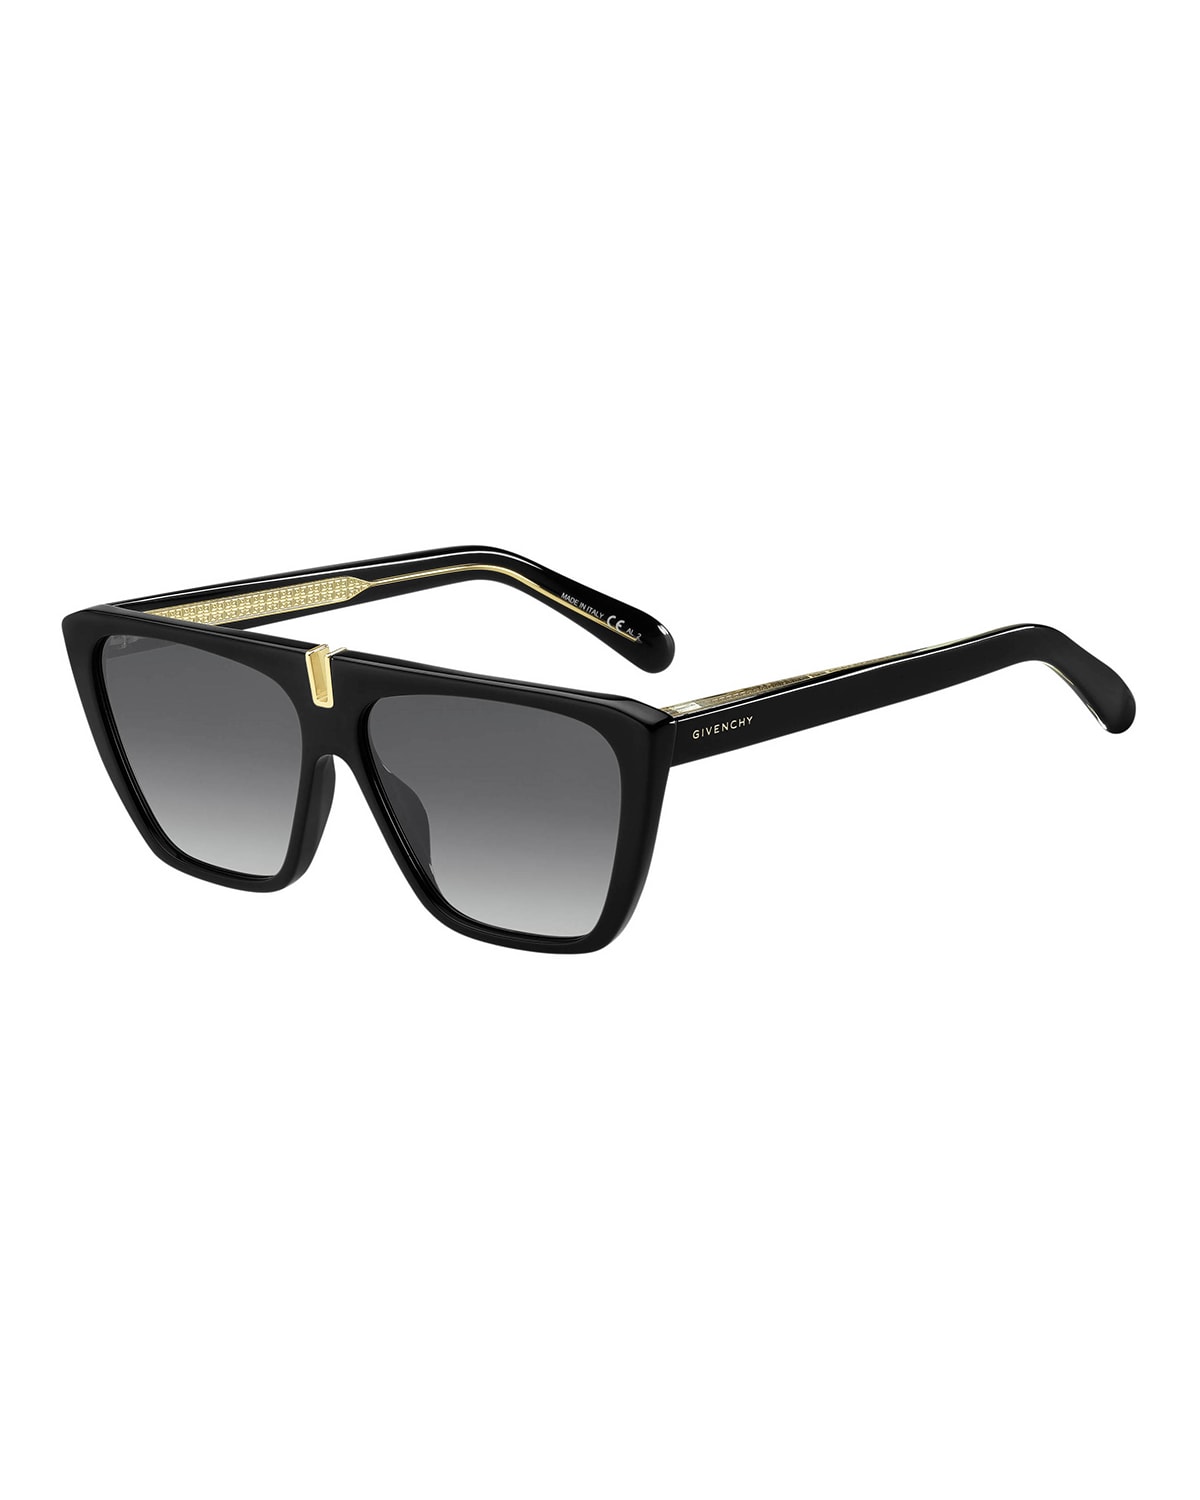 Givenchy Logo Sunglasses | Neiman Marcus